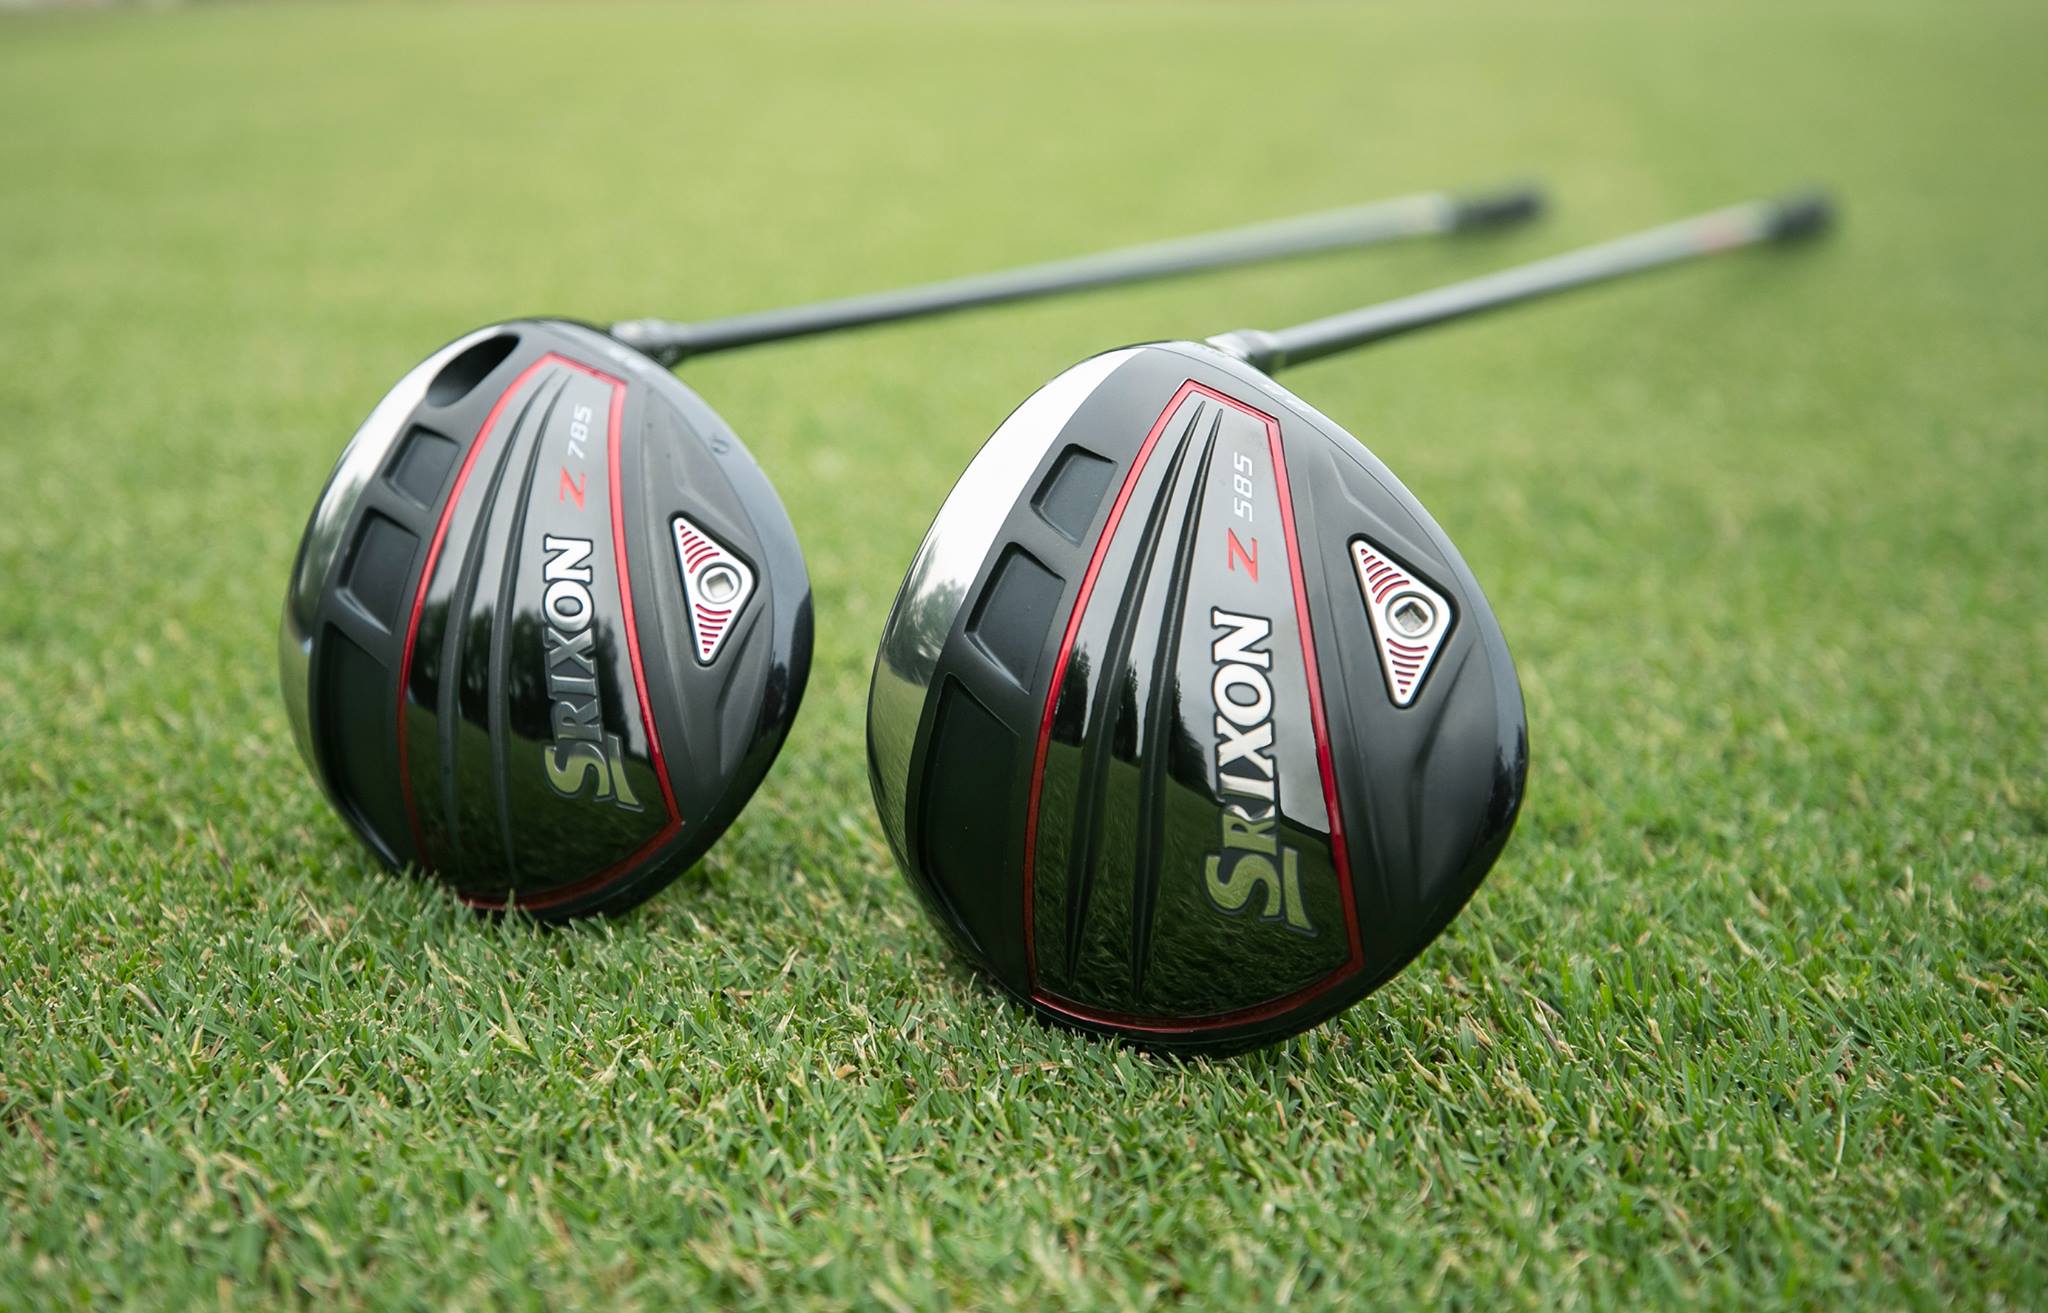 Srixon Golf Ball Fitting at Sammons Golf Links